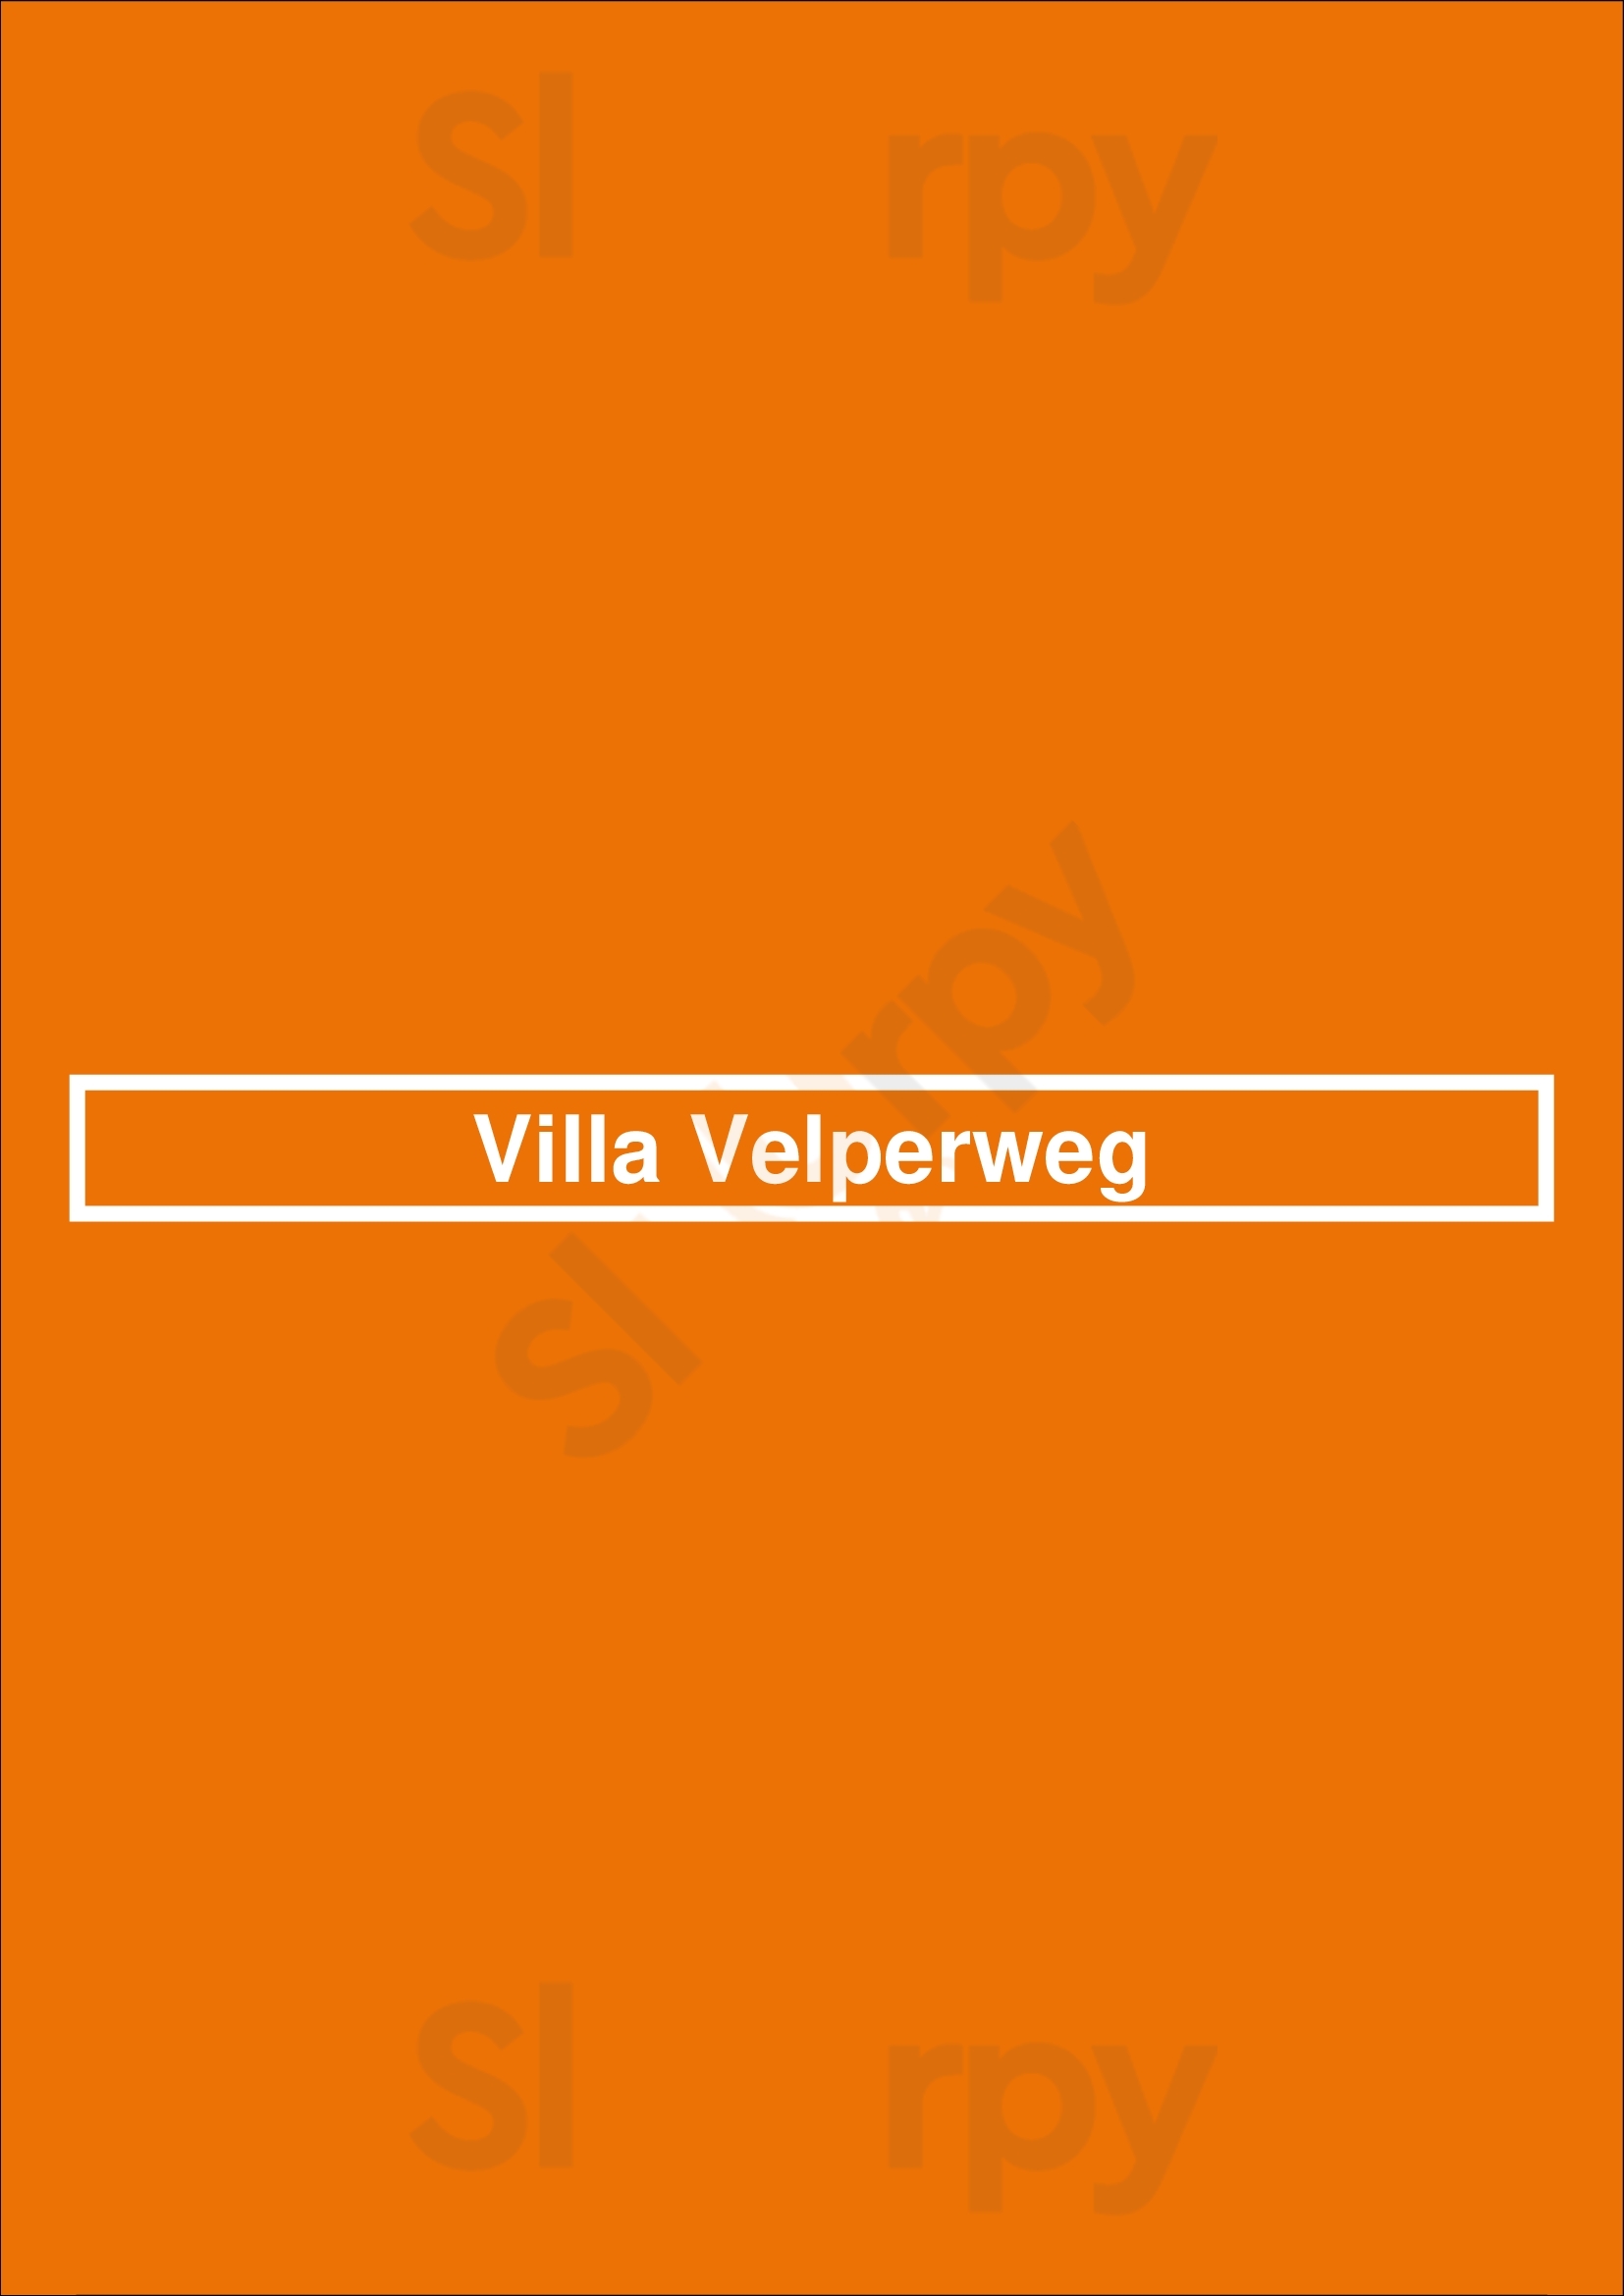 Villa Velperweg Arnhem Menu - 1